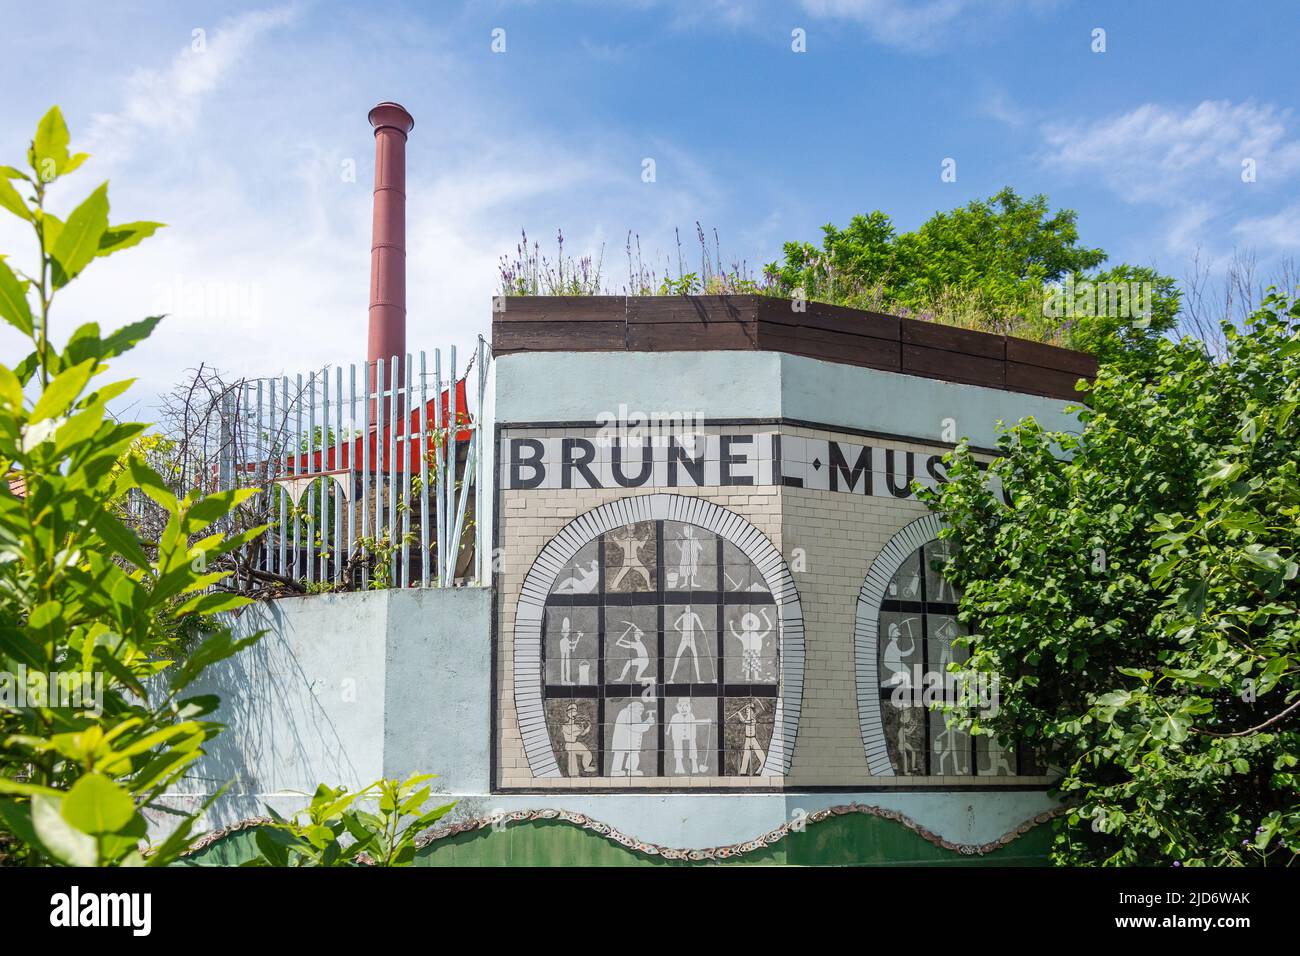 Brunel Museum, Railway Avenue, Rotherhithe, The London Borough of Southwark, Greater London, England, United Kingdom Stock Photo